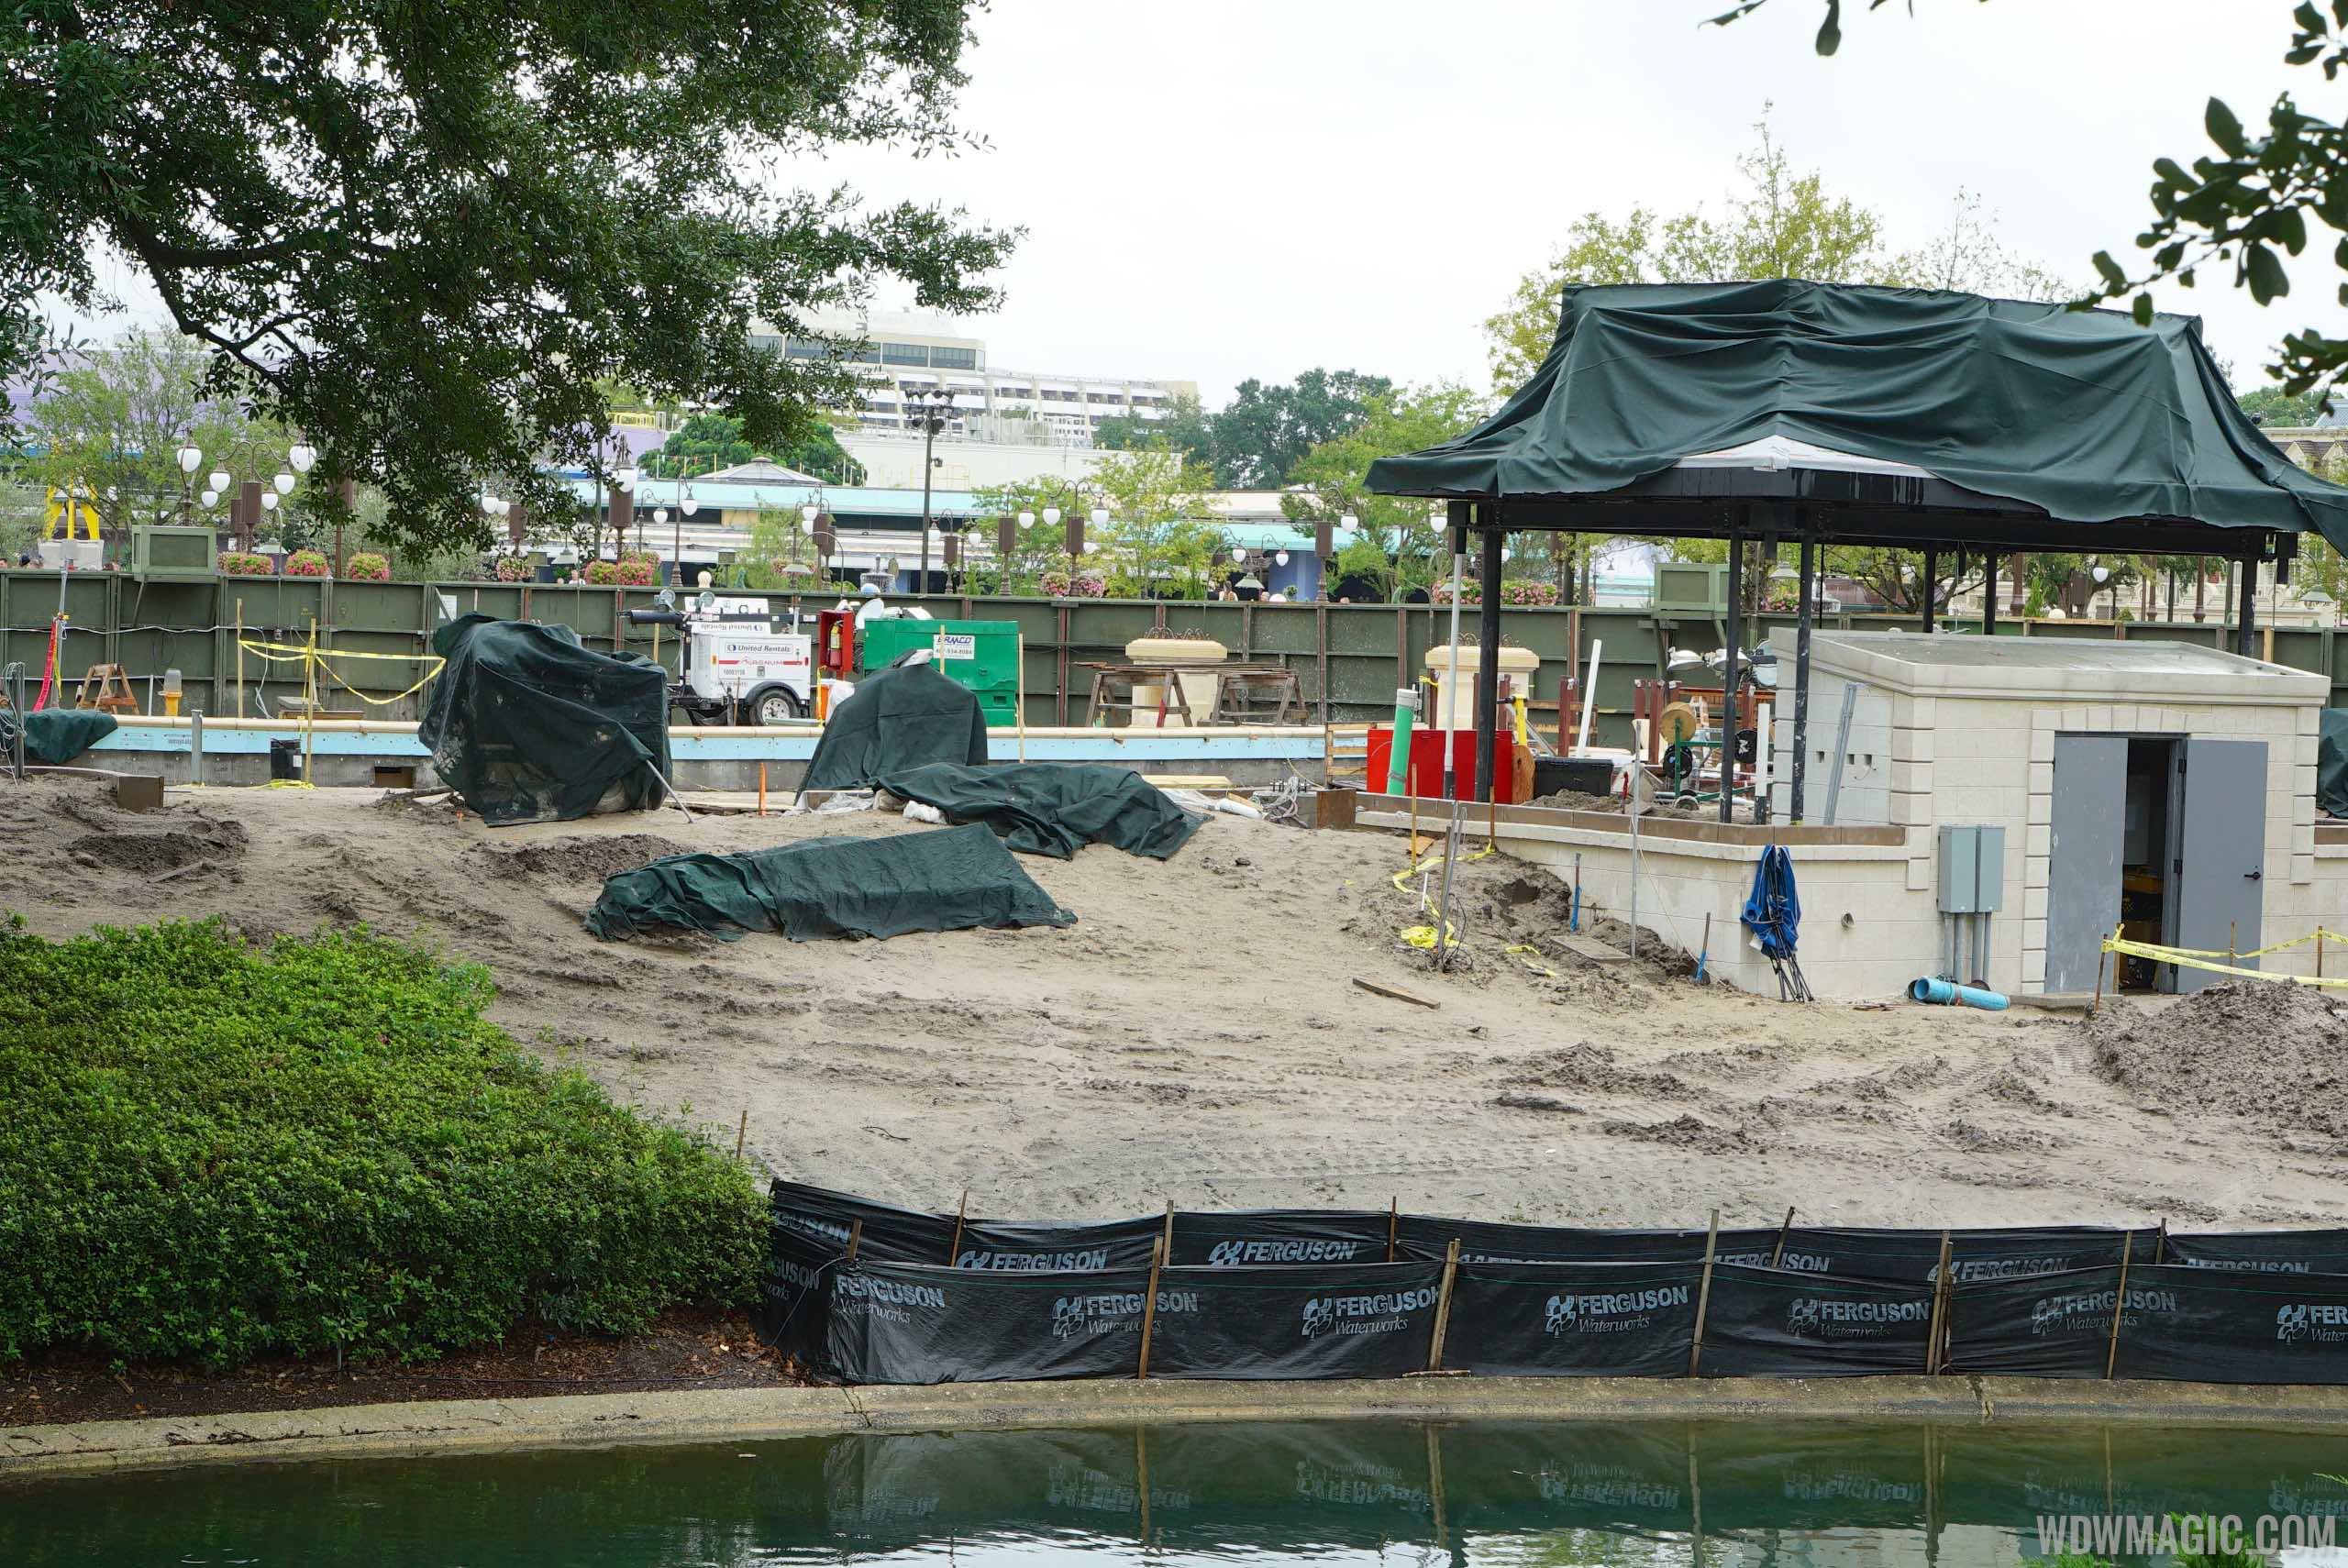 PHOTOS - Magic Kingdom central hub walkway construction update